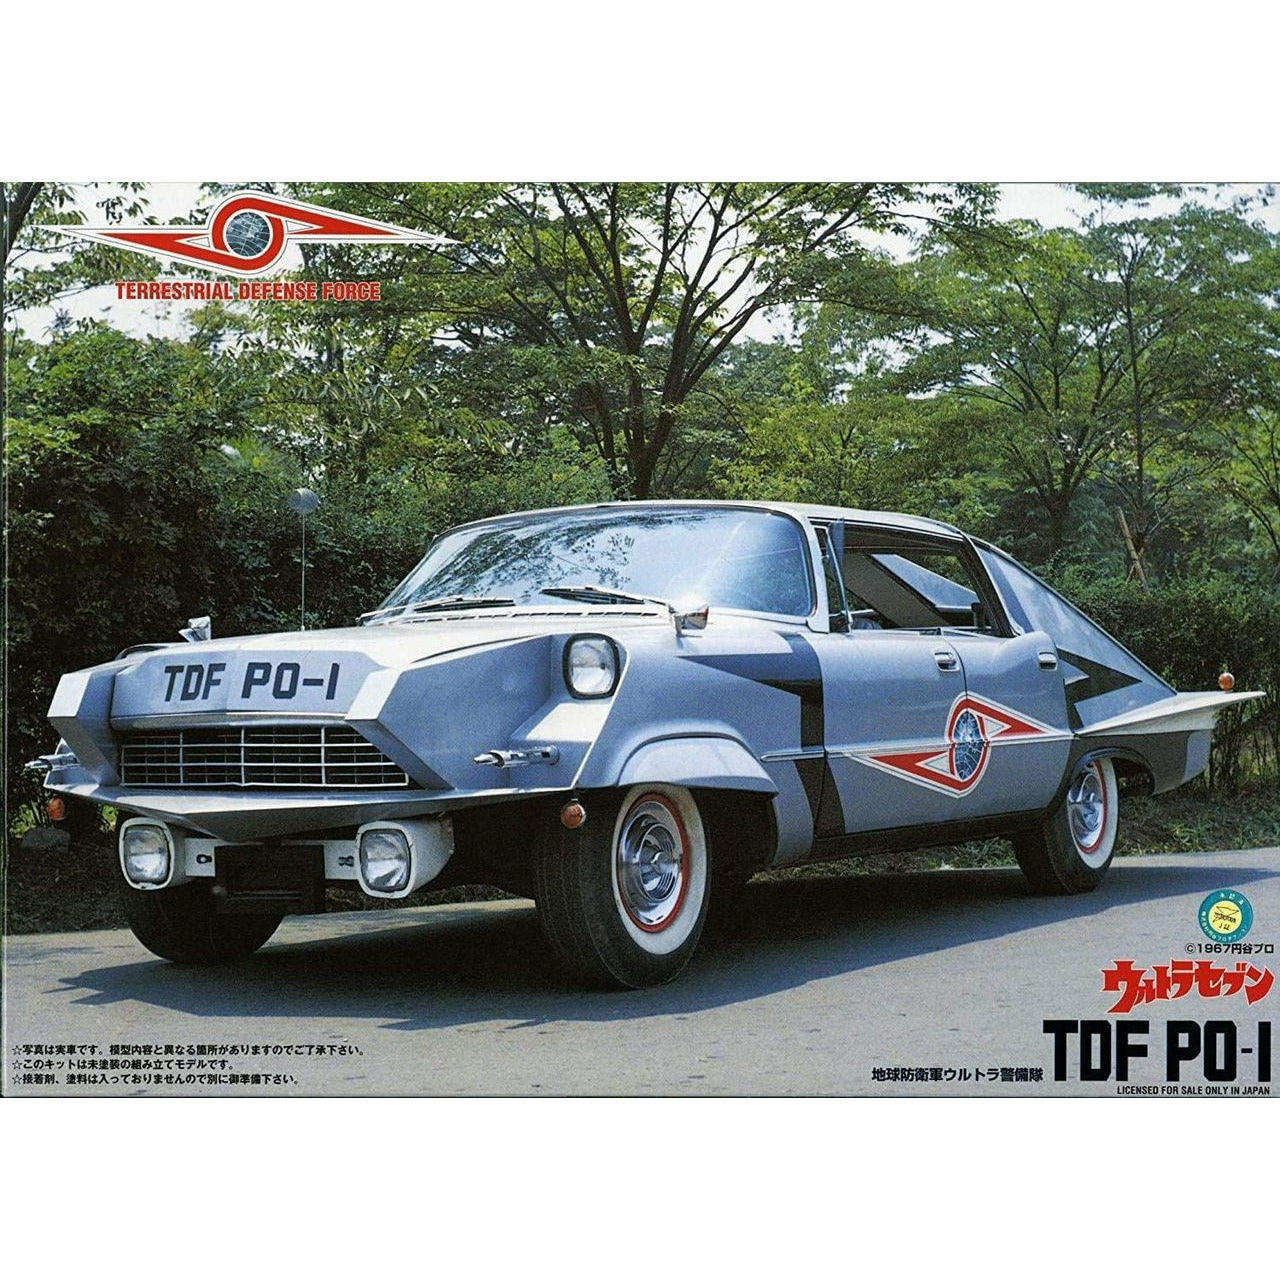 TDF PO-I Pointer 1/24 Model Car Kit #92164 by Fujimi